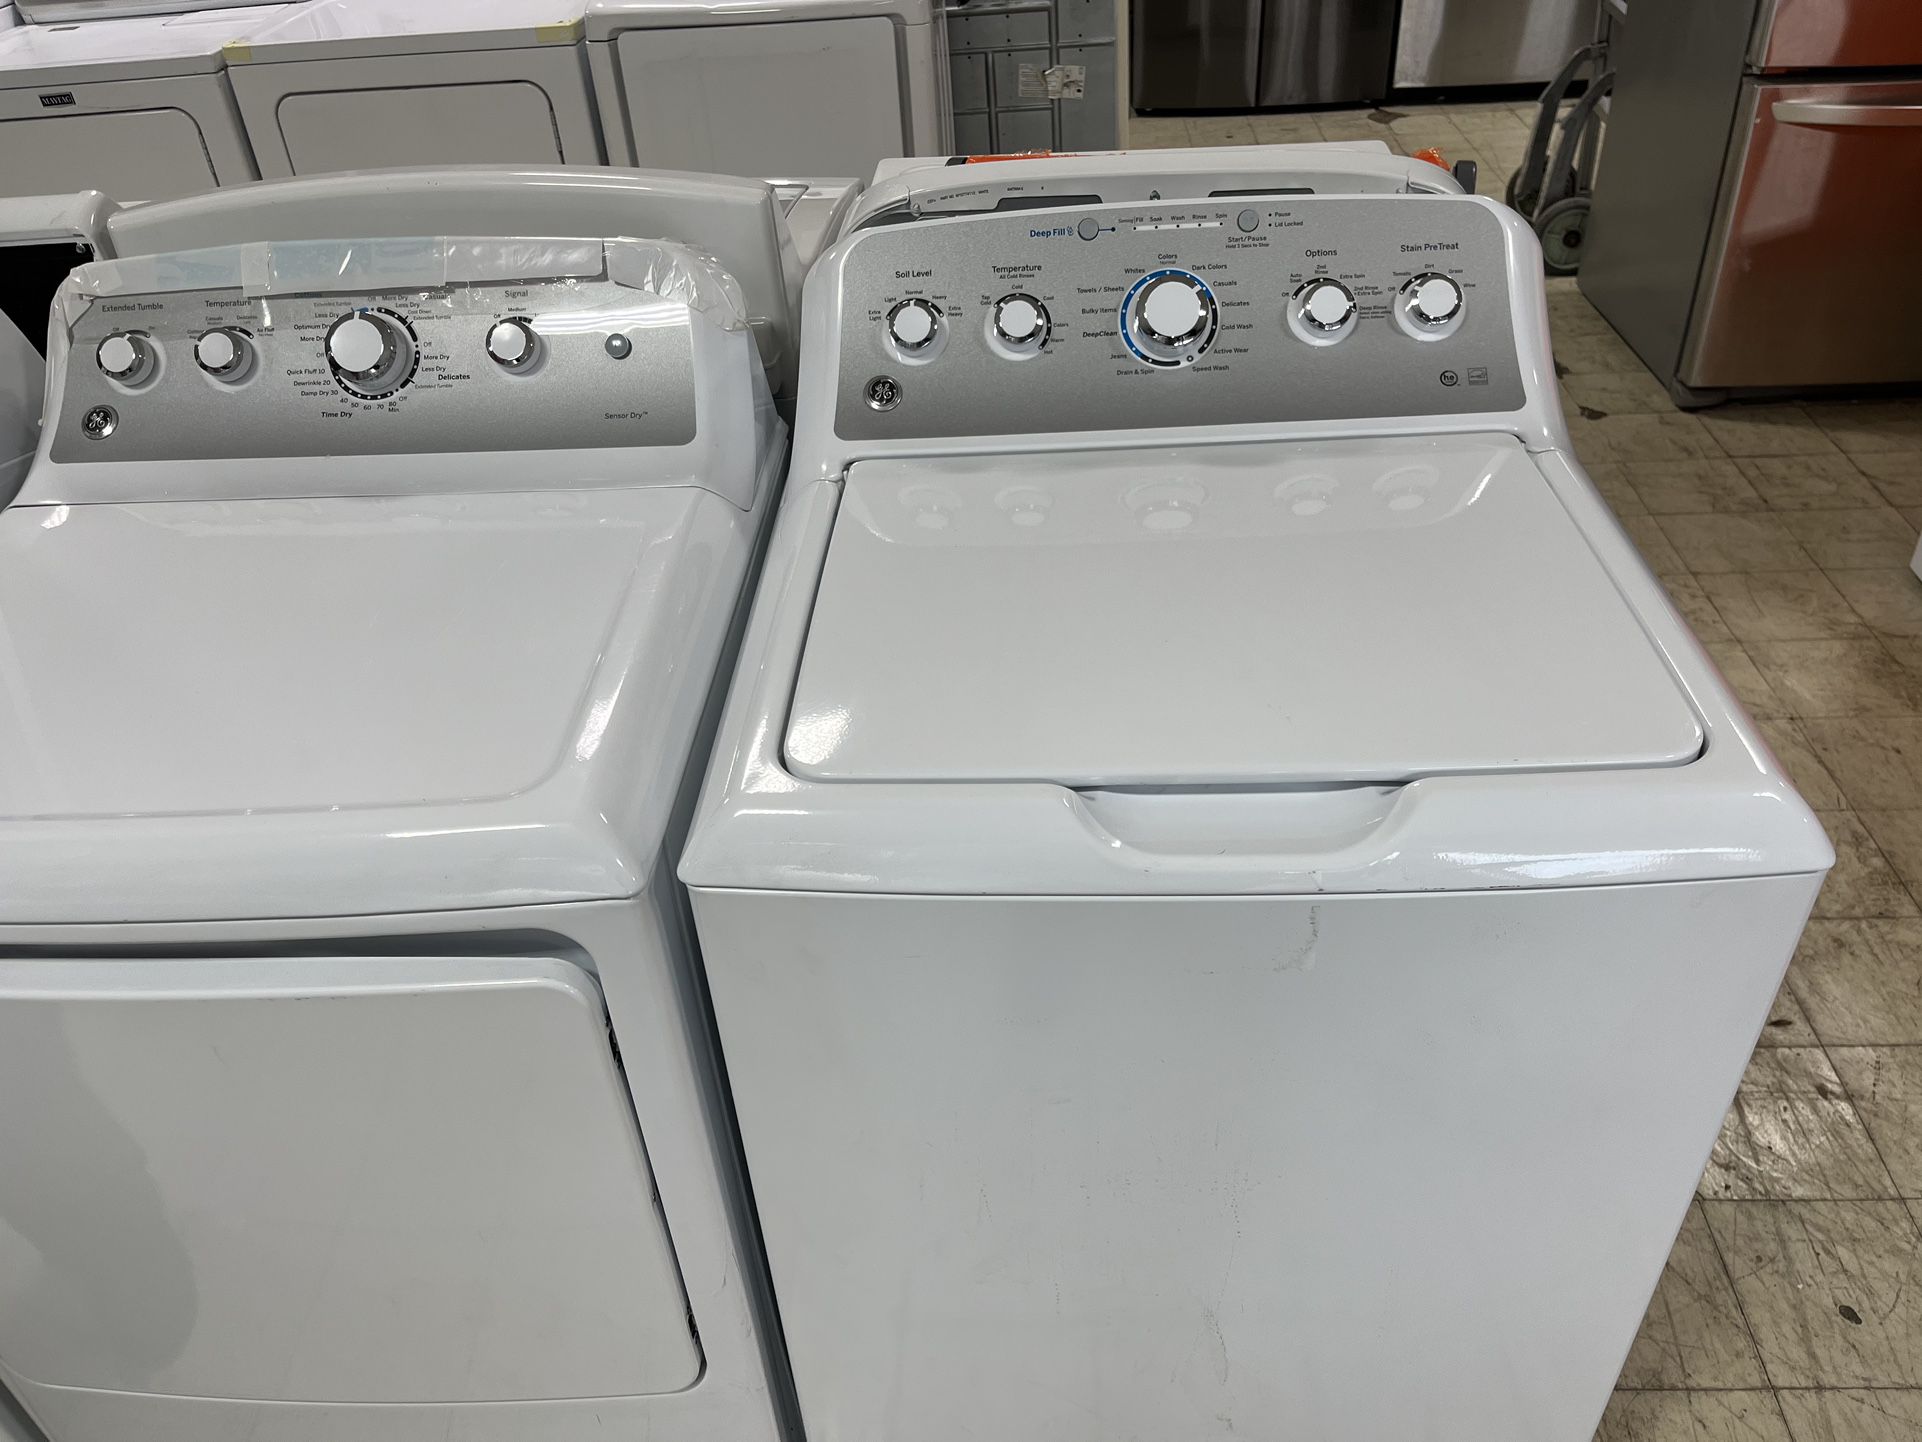 Brand new GE washer dryer